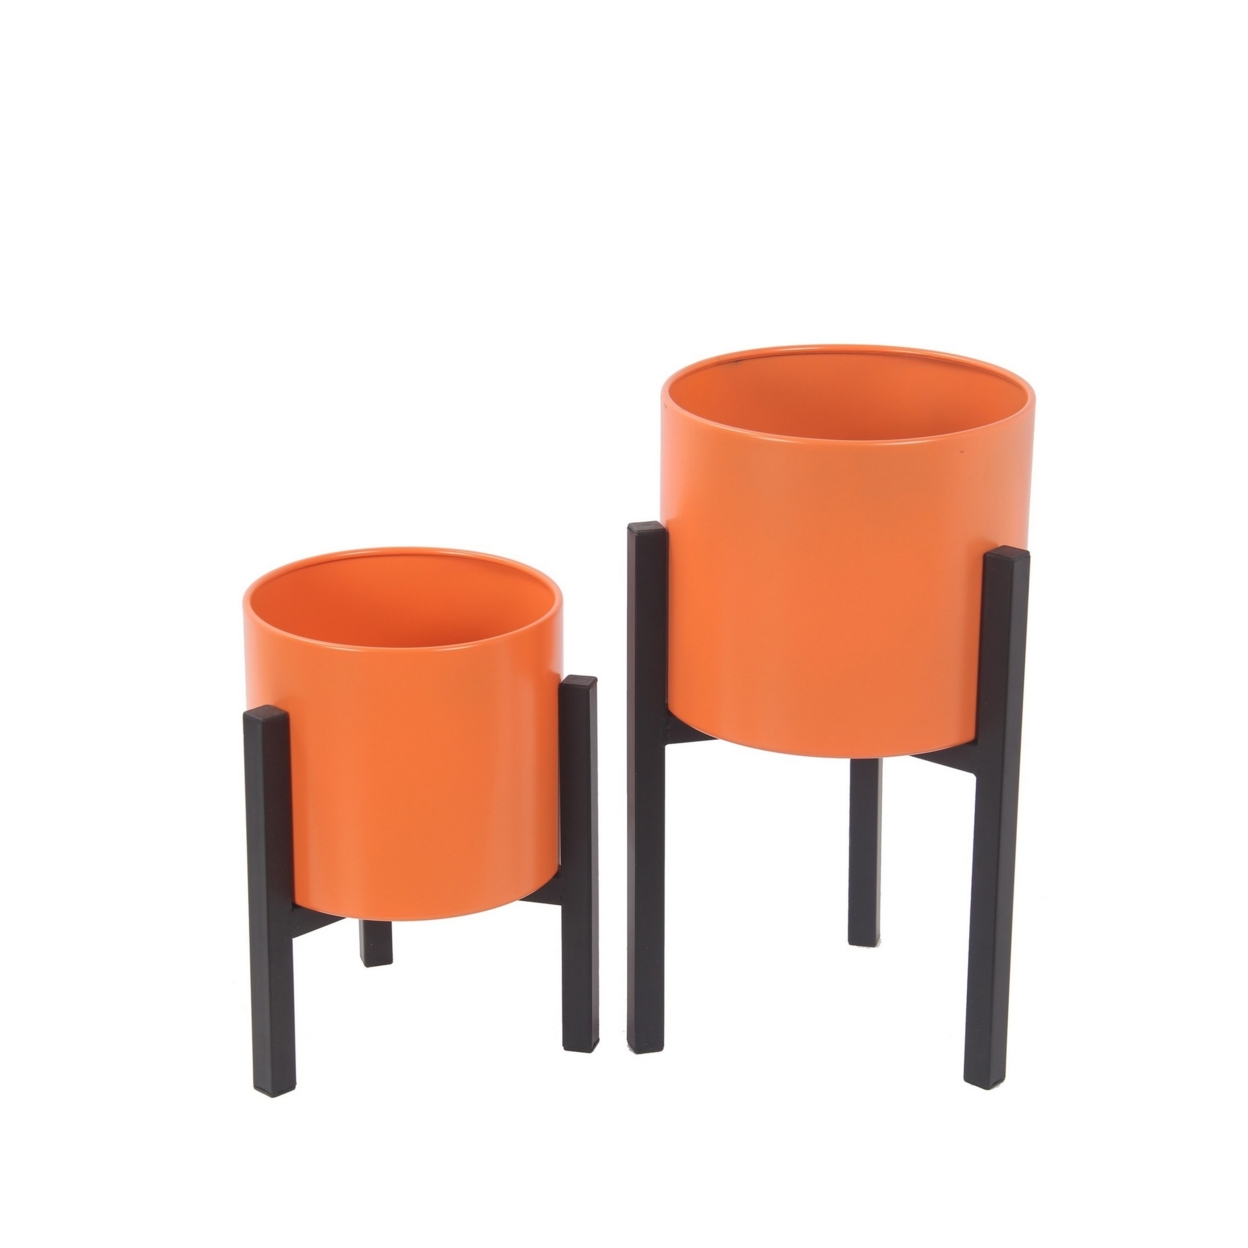 Thea 13, 18 Inch Set Of 2 Modern Planters In Matte Orange And Black Finish- Saltoro Sherpi